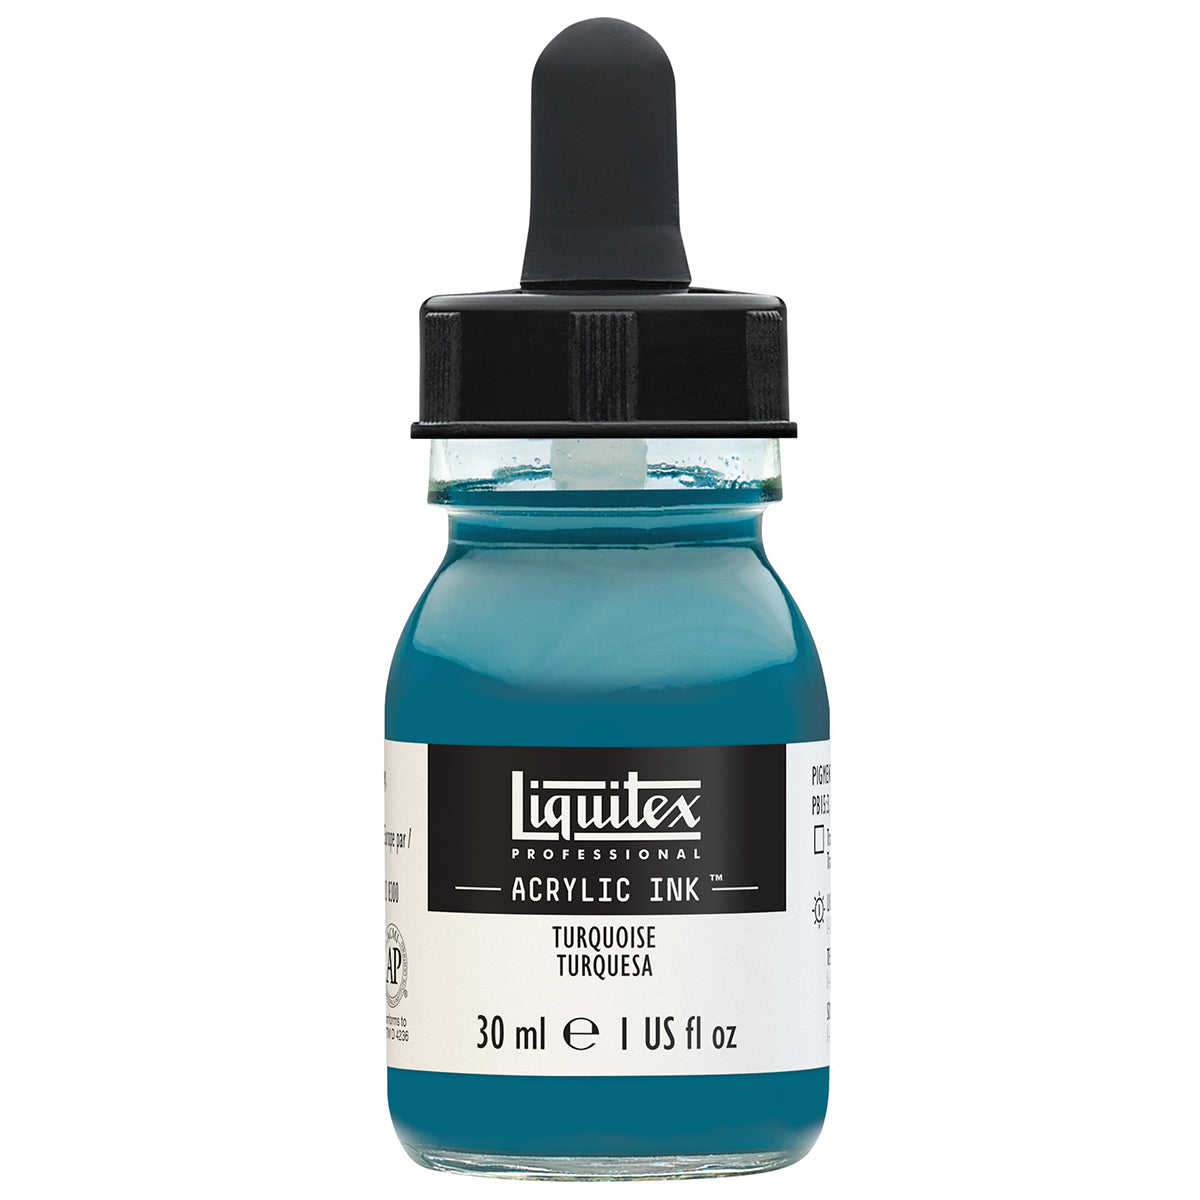 Liquitex-Encre Acrylique-30ml Turquoise